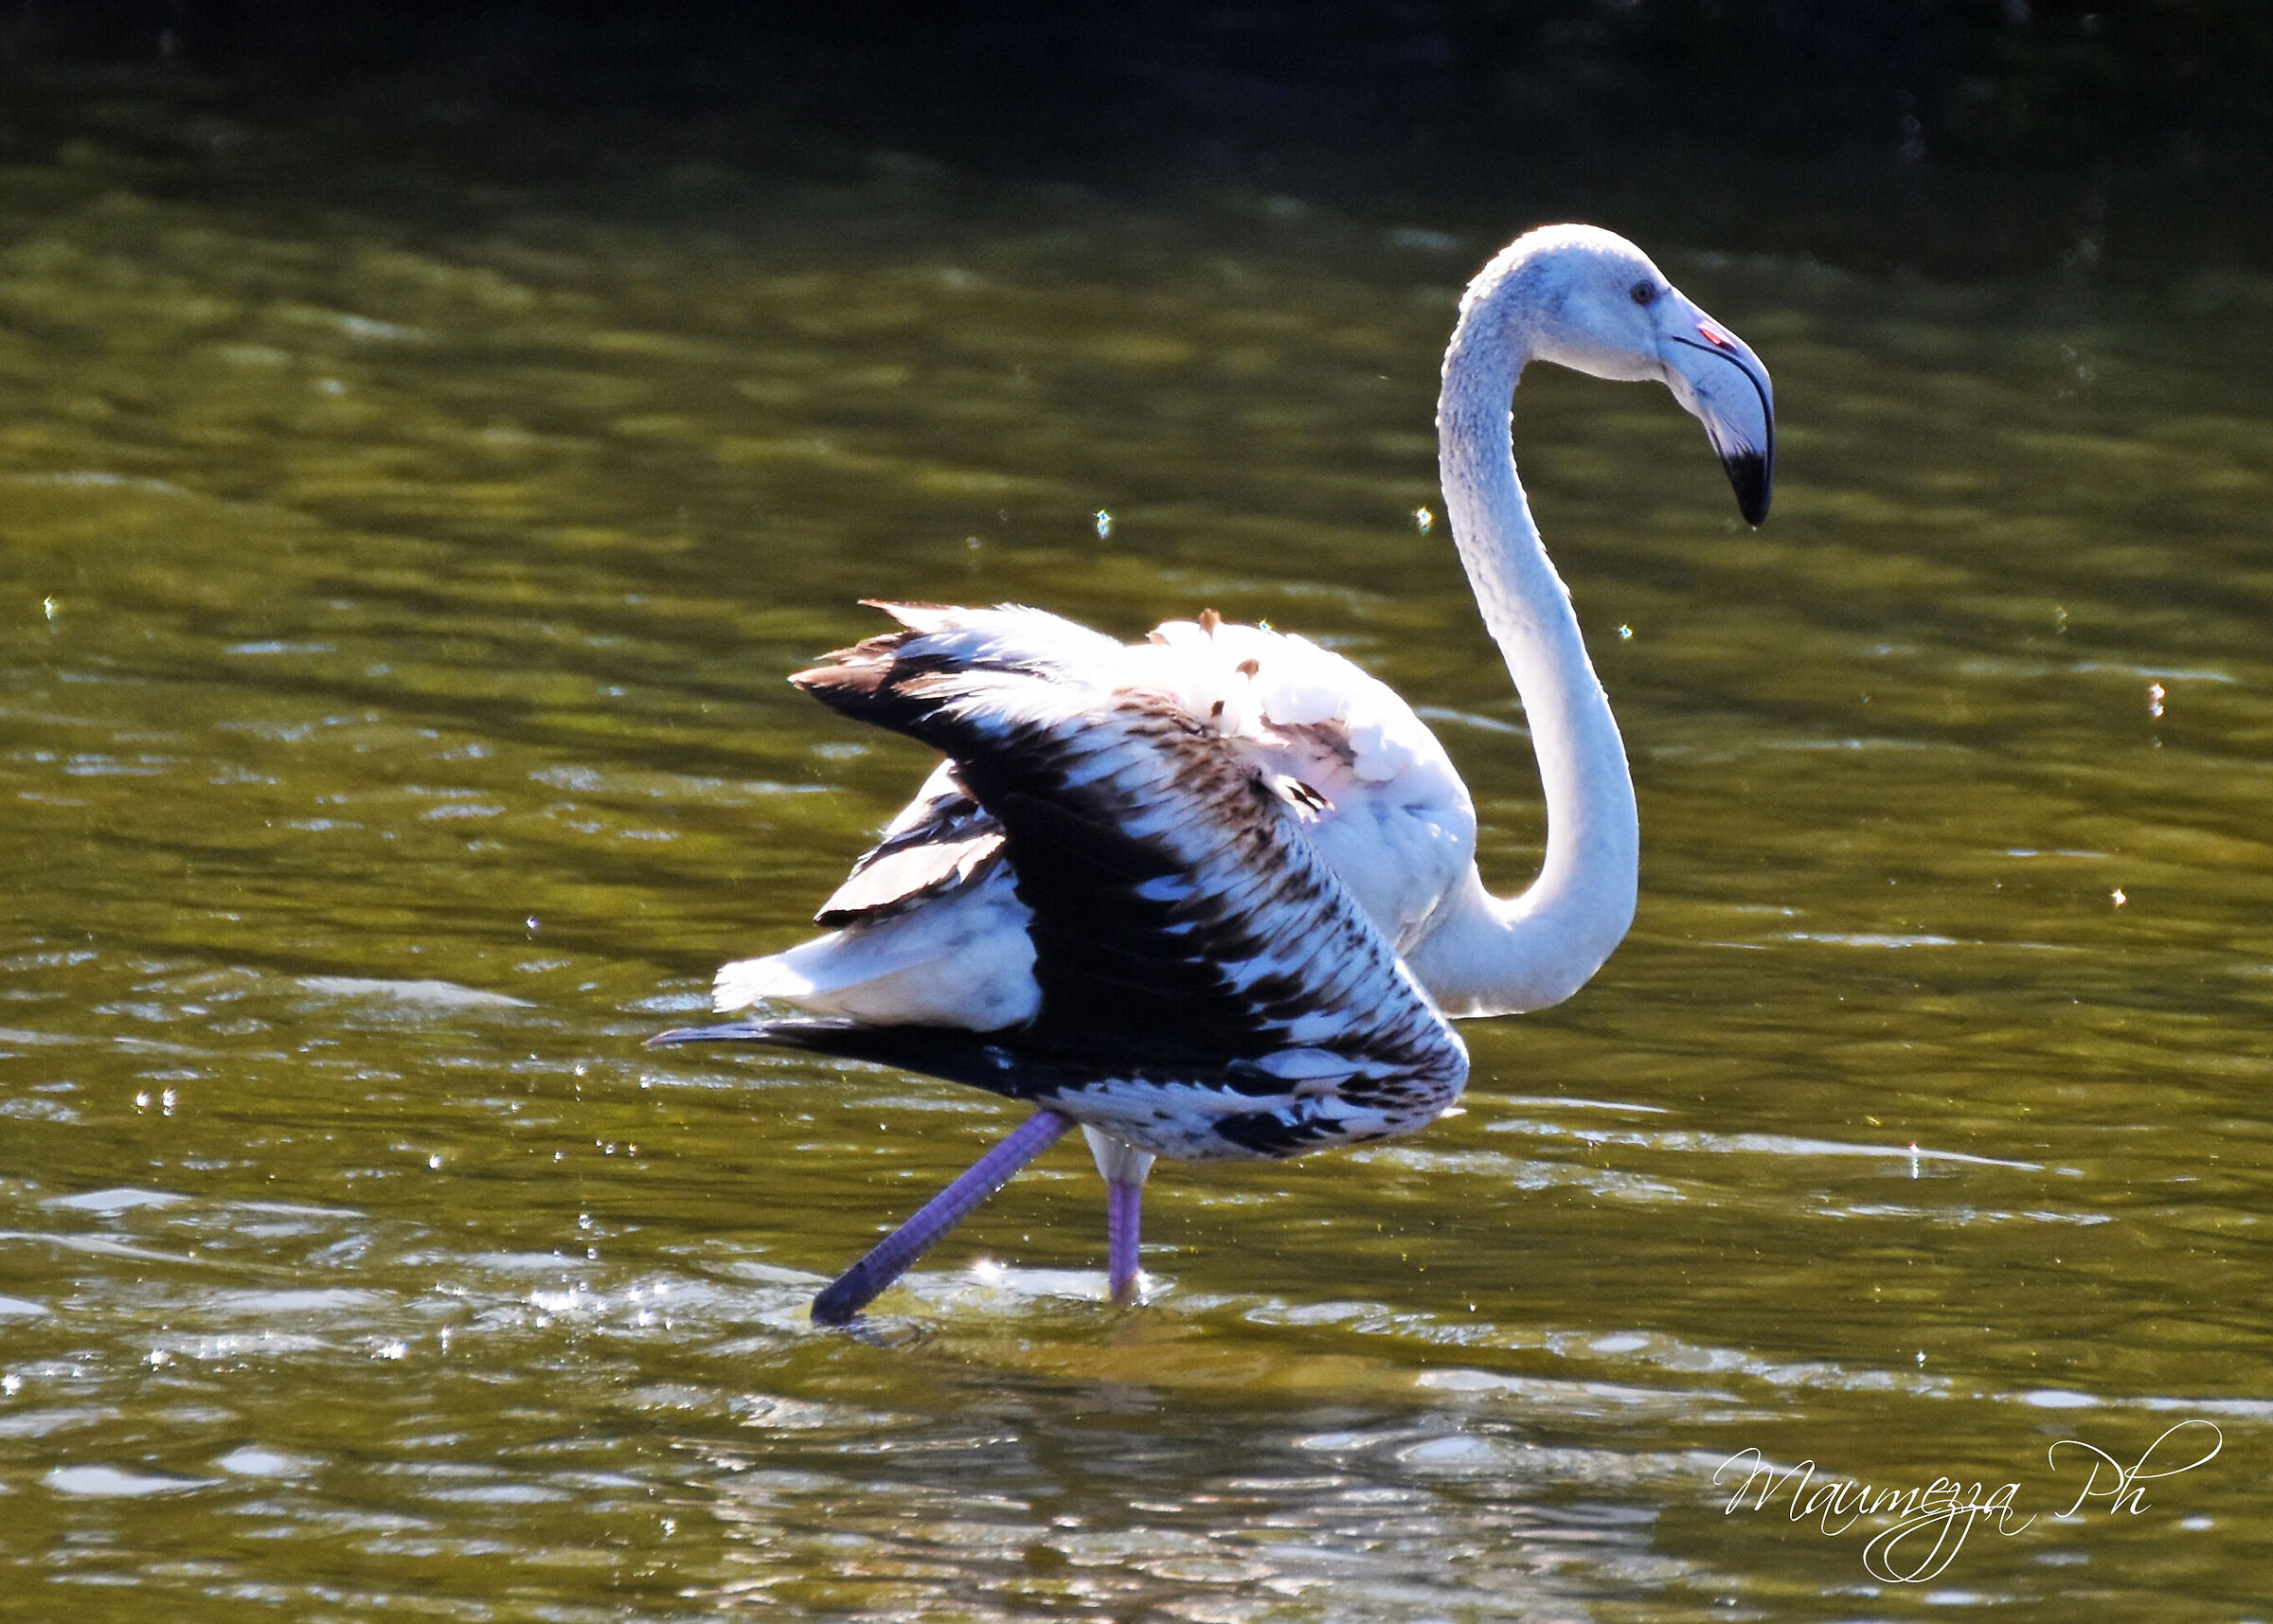 Flamingo on the run...